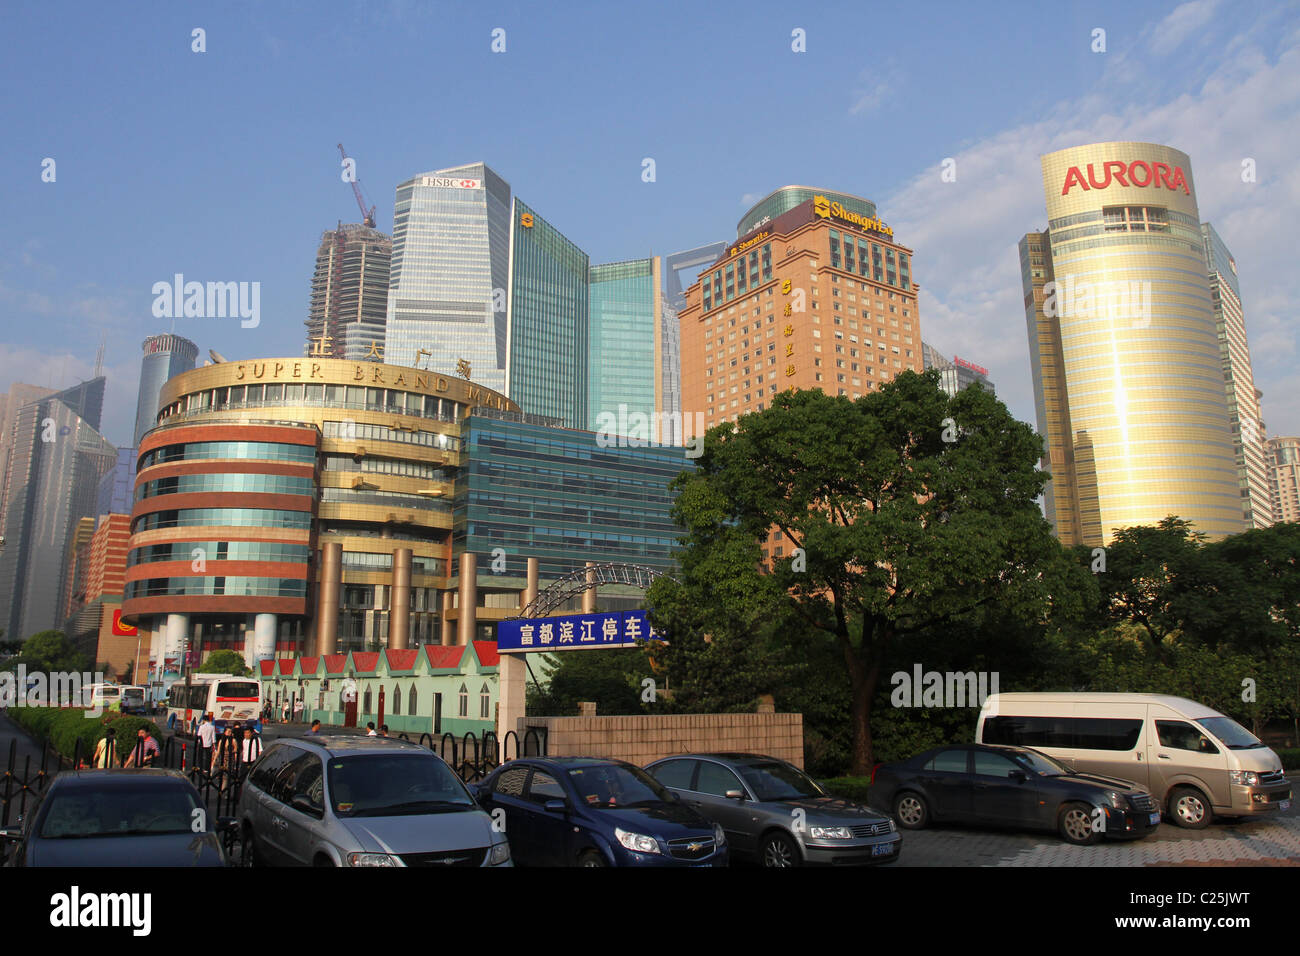 Street View. Il Pudong, Shanghai, Cina. Super Brand Mall, HSBC, Shangri-La, Aurora, edifici visibili. Foto Stock